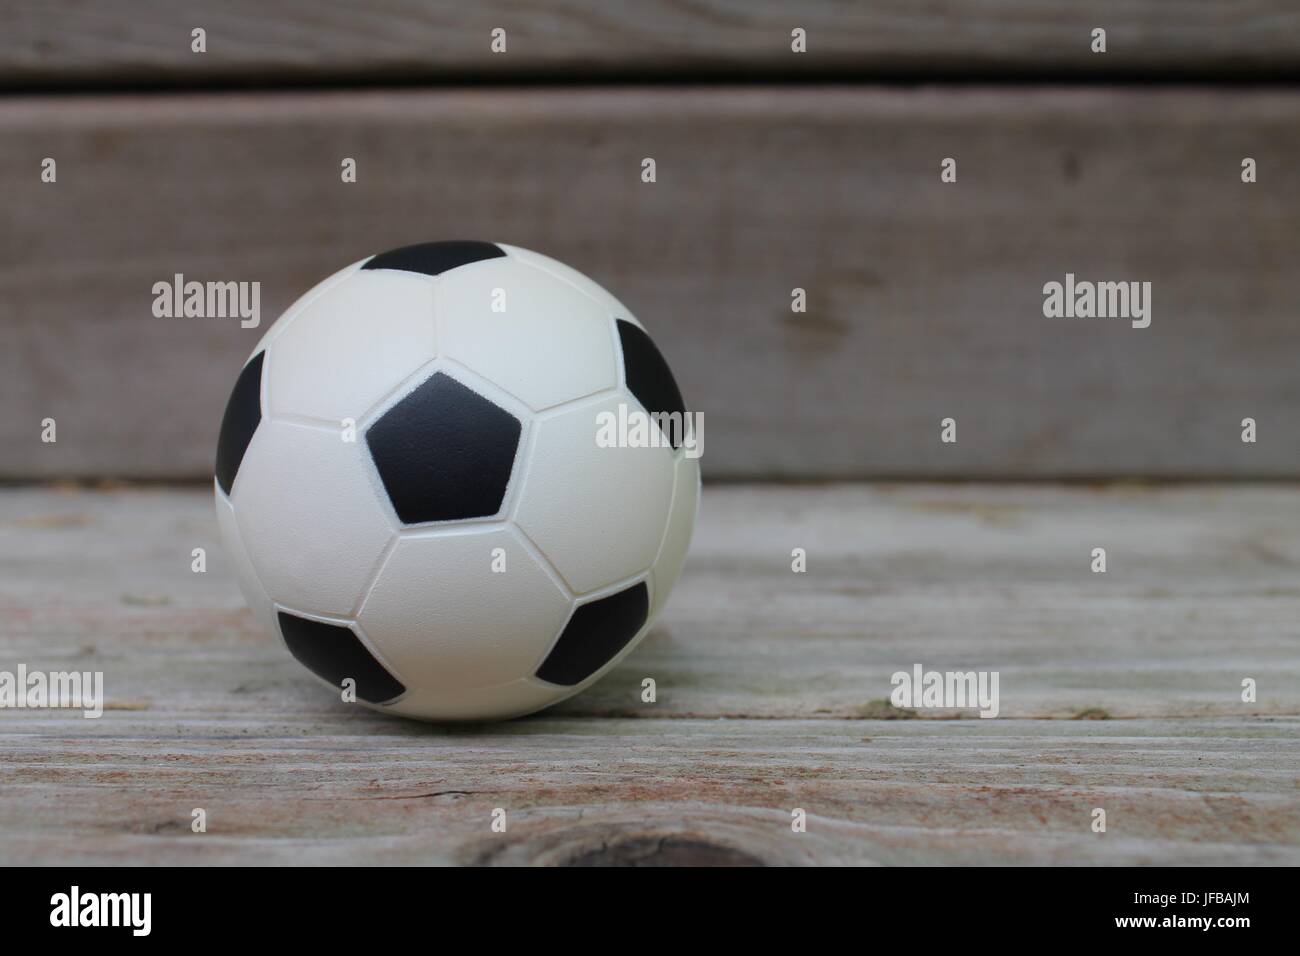 Ballon de soccer libre Banque D'Images